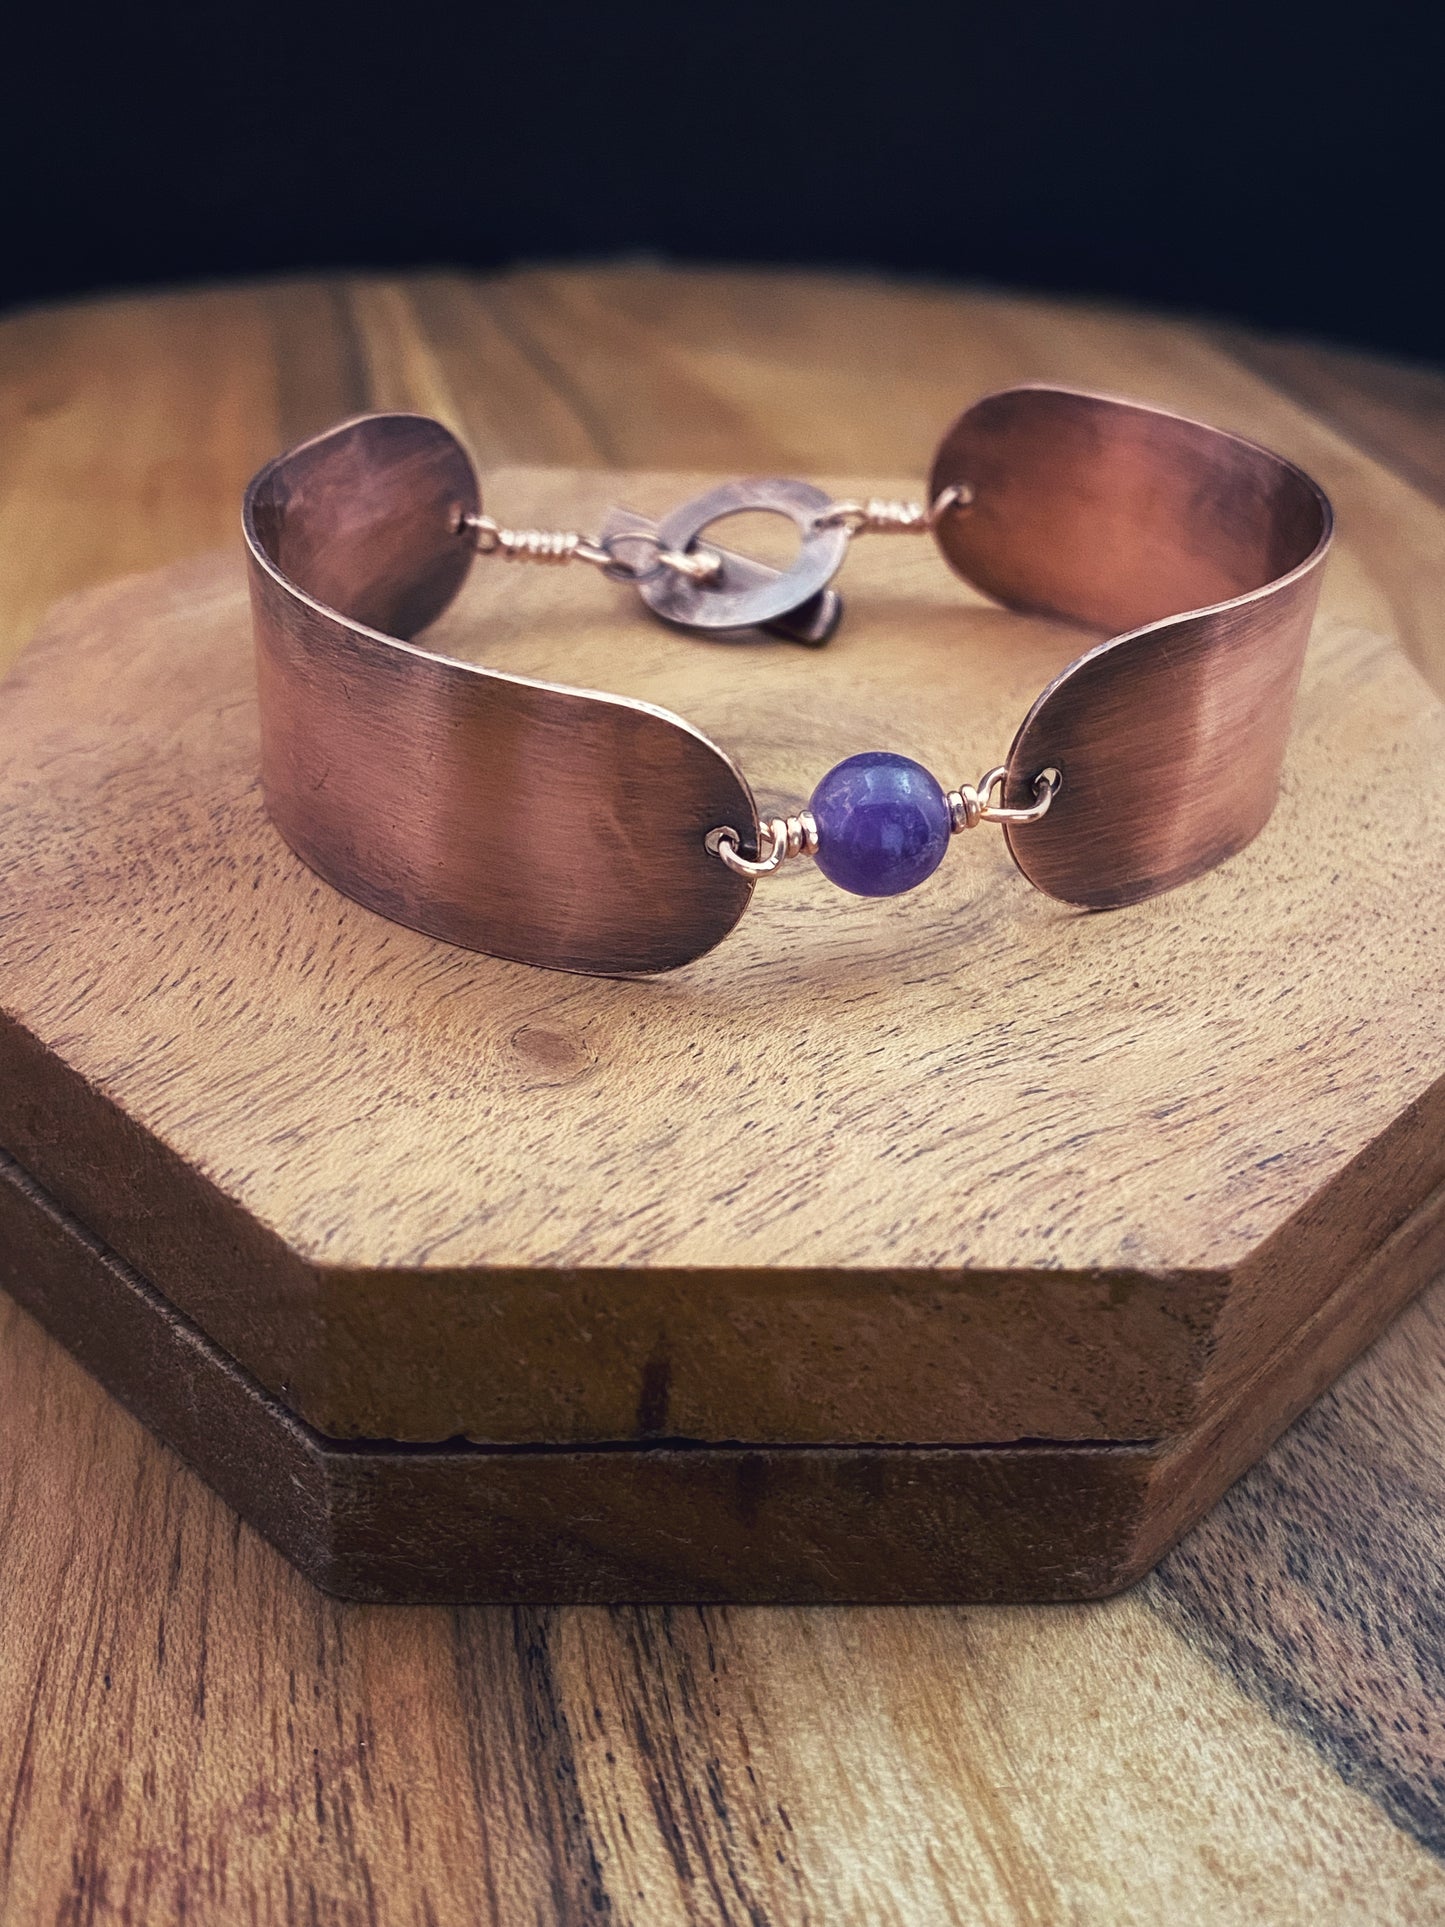 Copper and amethyst cuff bracelet